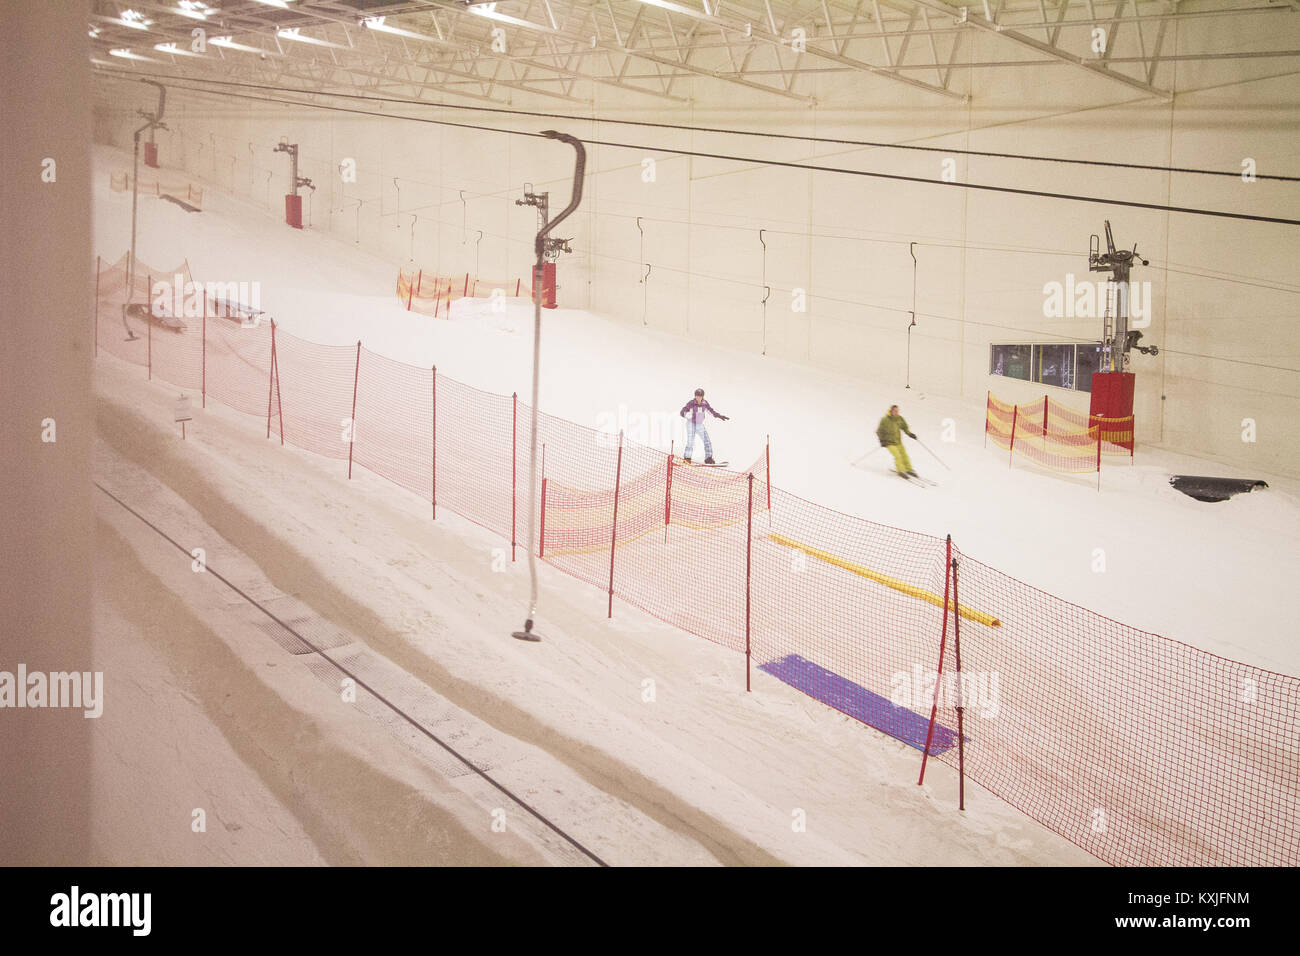 Indoor skiing, UK Stock Photo